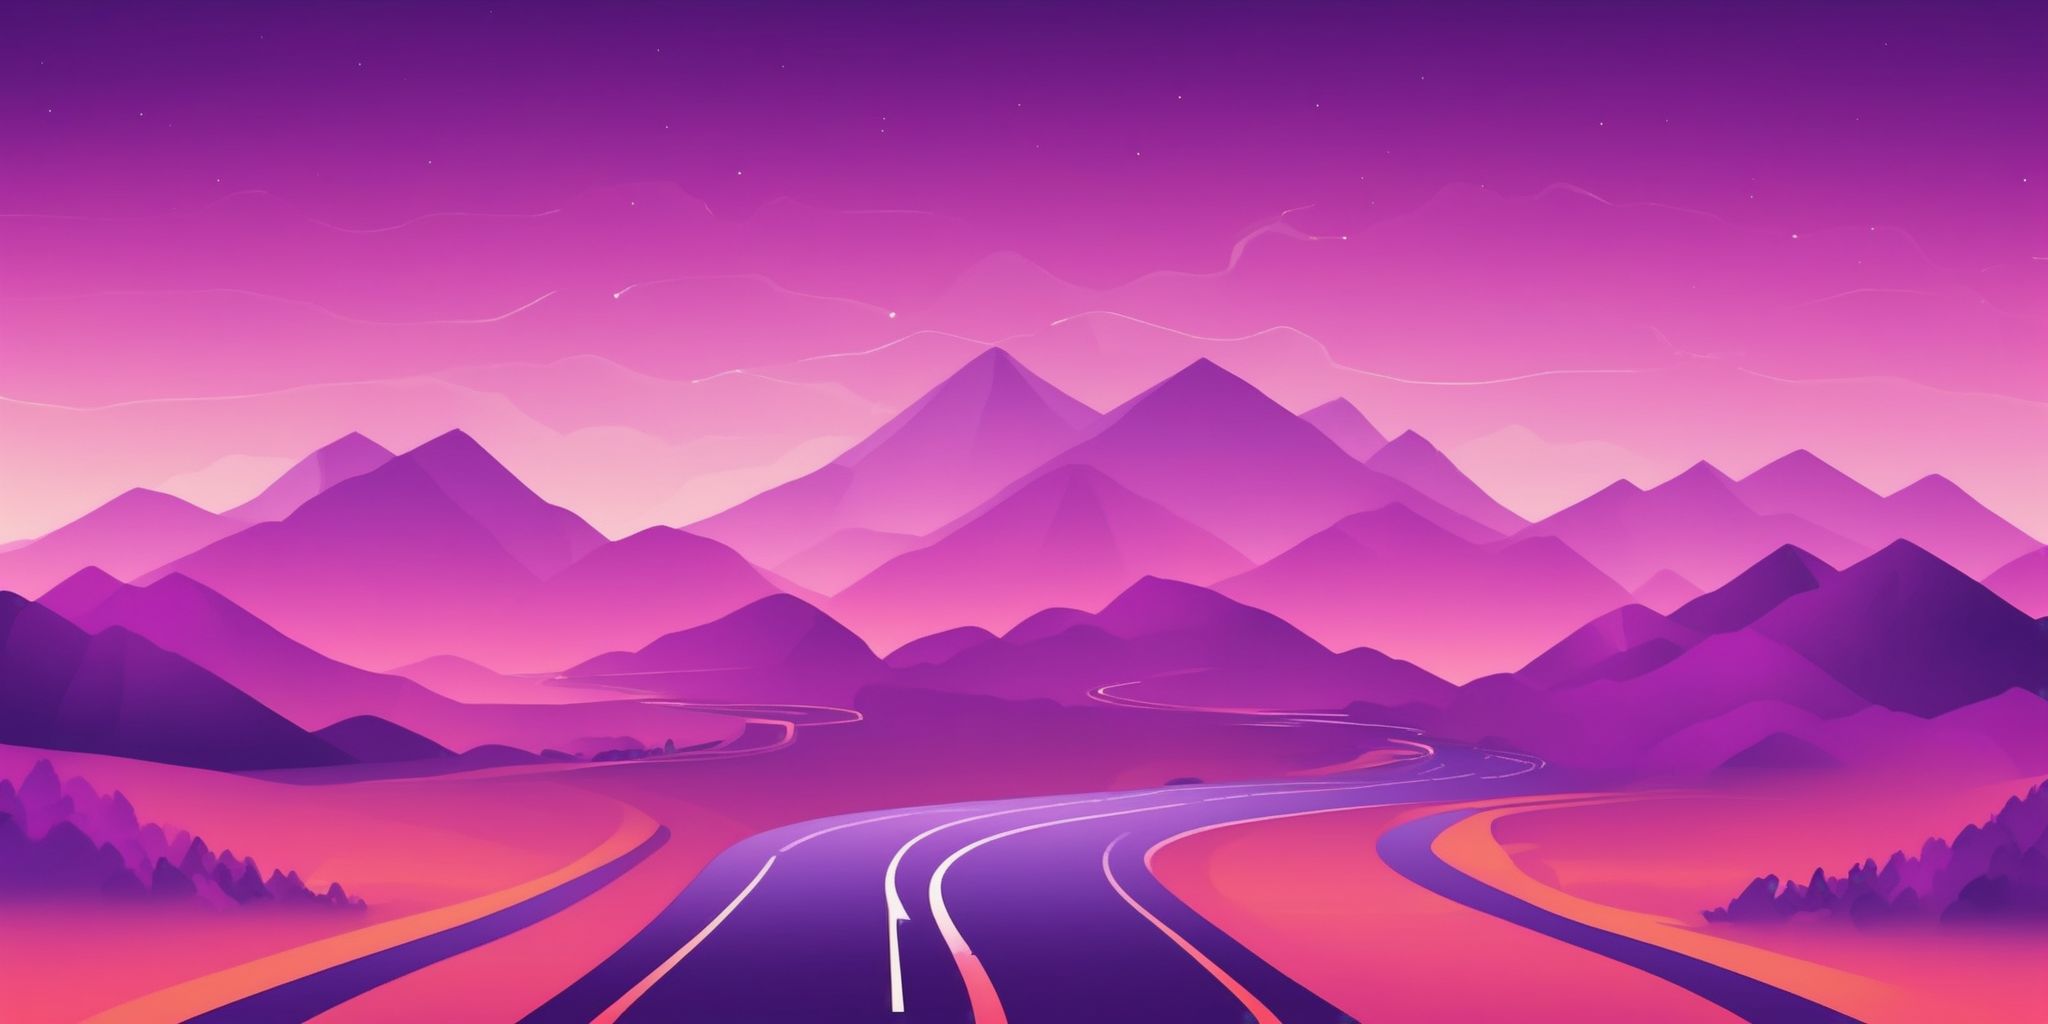 Image Metaphor: Roadmap in flat illustration style, colorful purple gradient colors